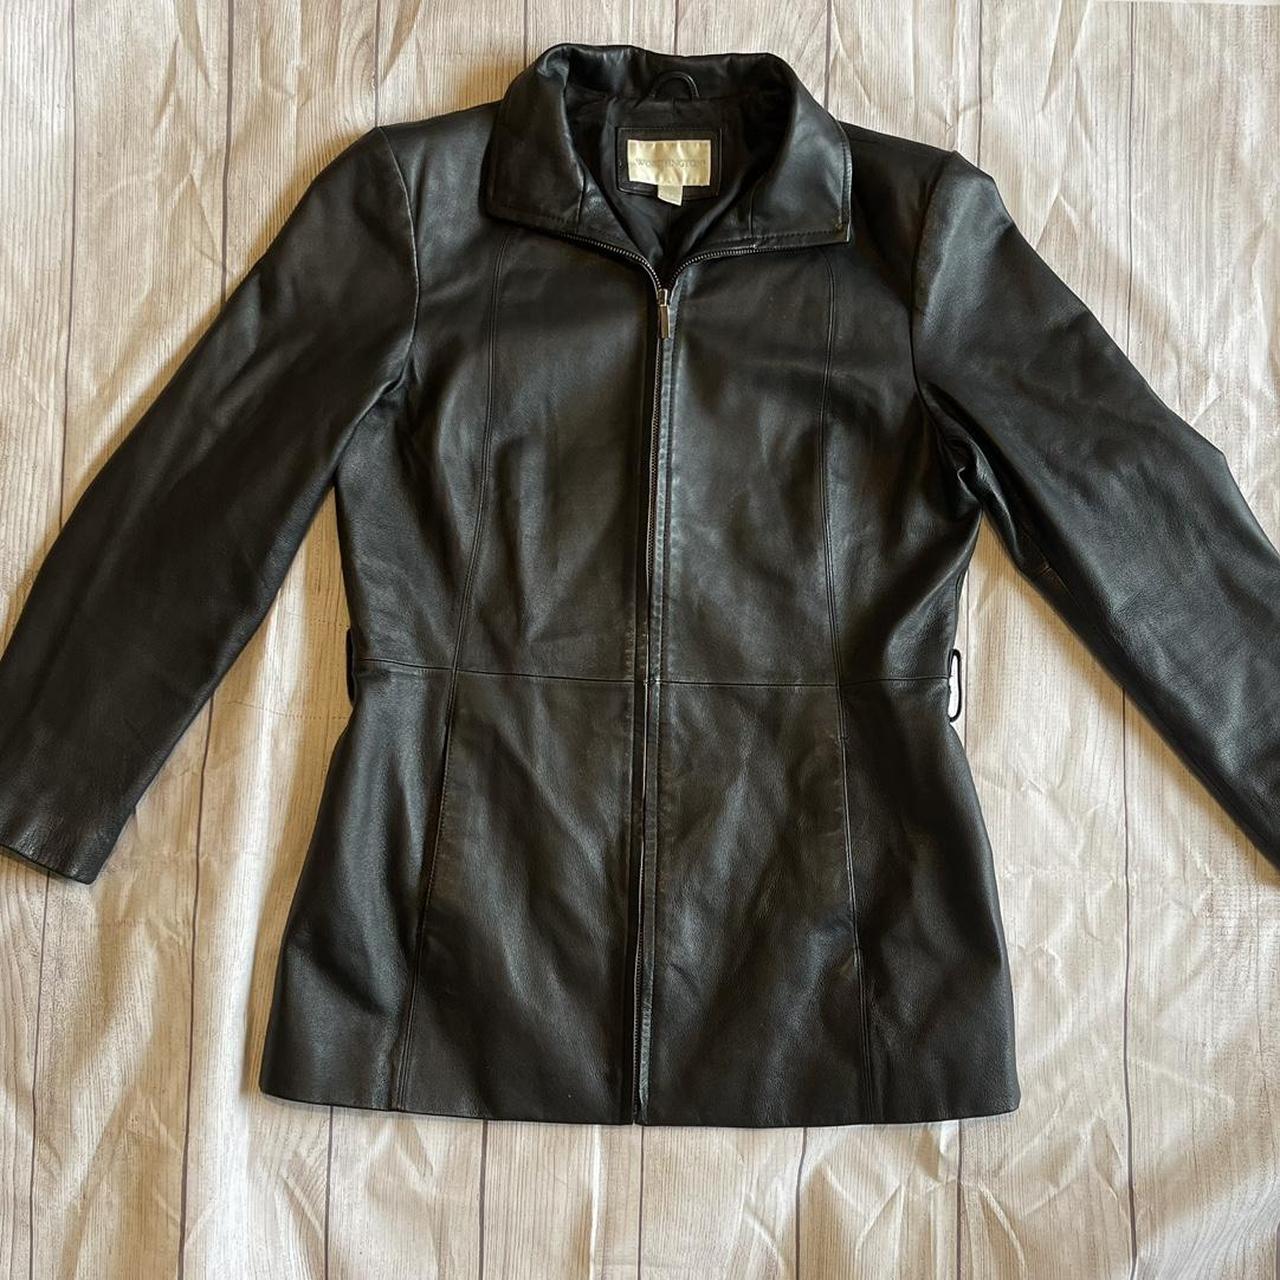 Vintage Worthington Leather Jacket size medium -... - Depop